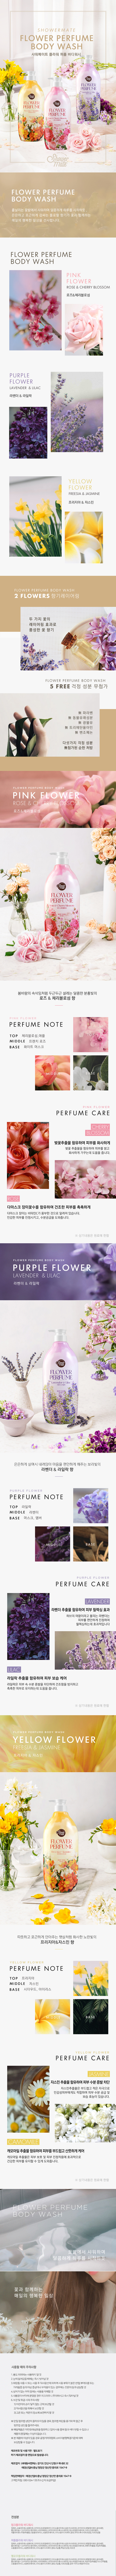 de_flower_perfume_wash.jpg